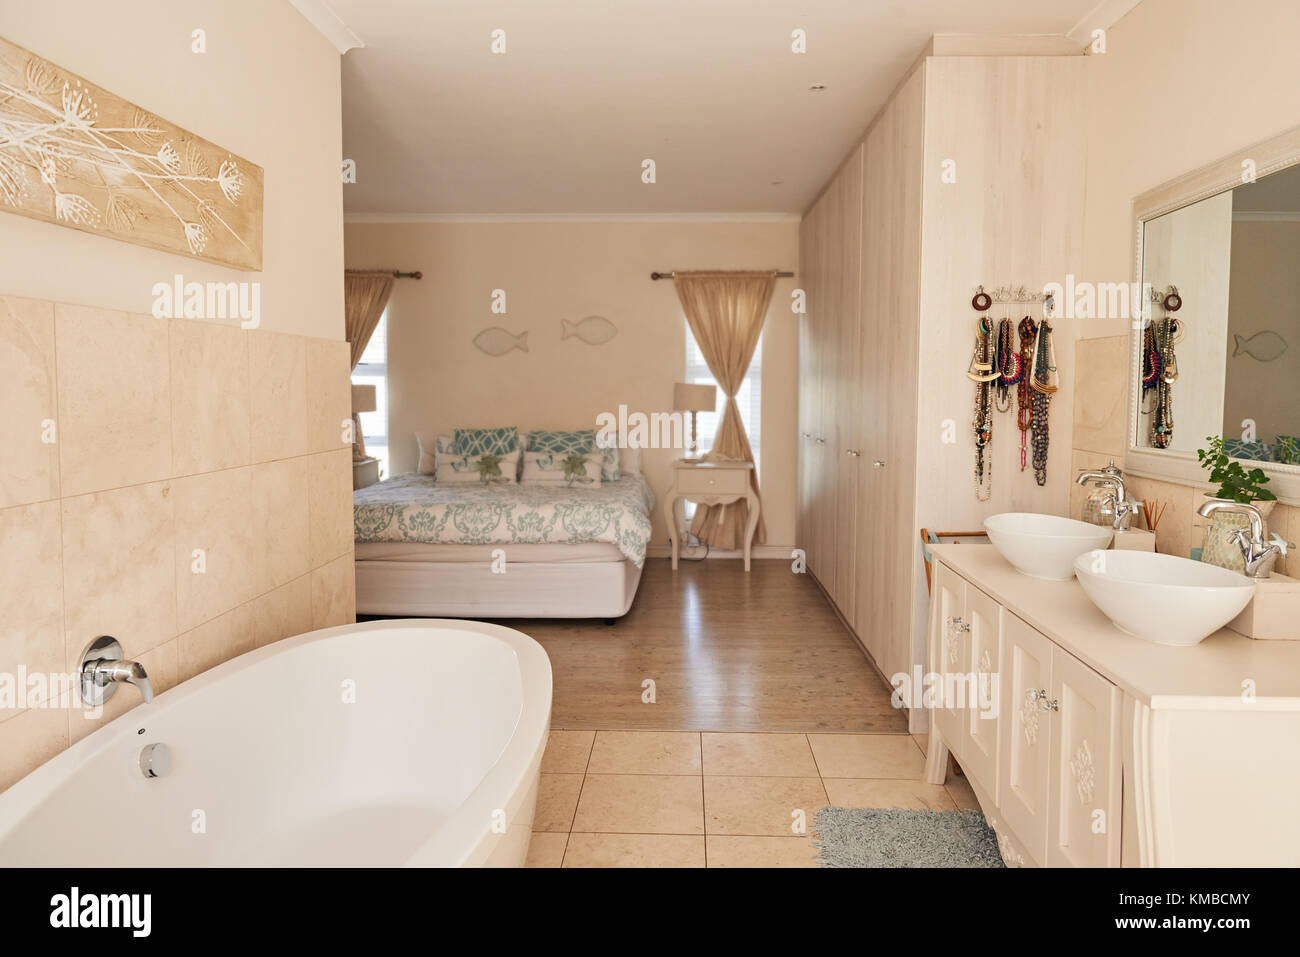 Contemporary bathroom interior in a stylish suburban home Stock Photo